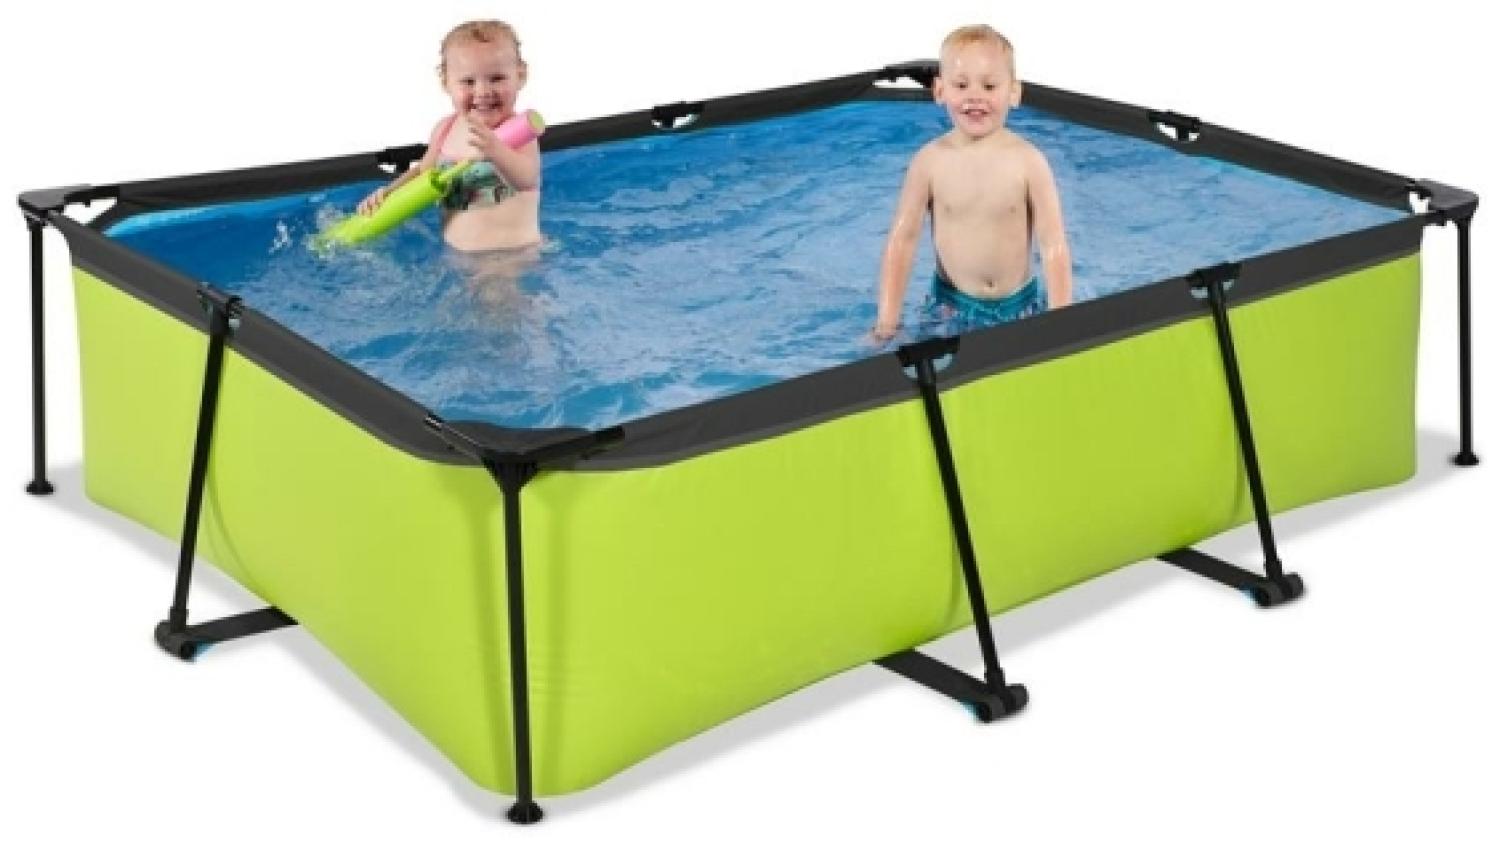 EXIT Lime Pool 220x150x65cm mit Filterpumpe - grün 1800 l Gerahmter Pool Kind & Erwachsener 3 Person(en) Wetterfest Grün Bild 1